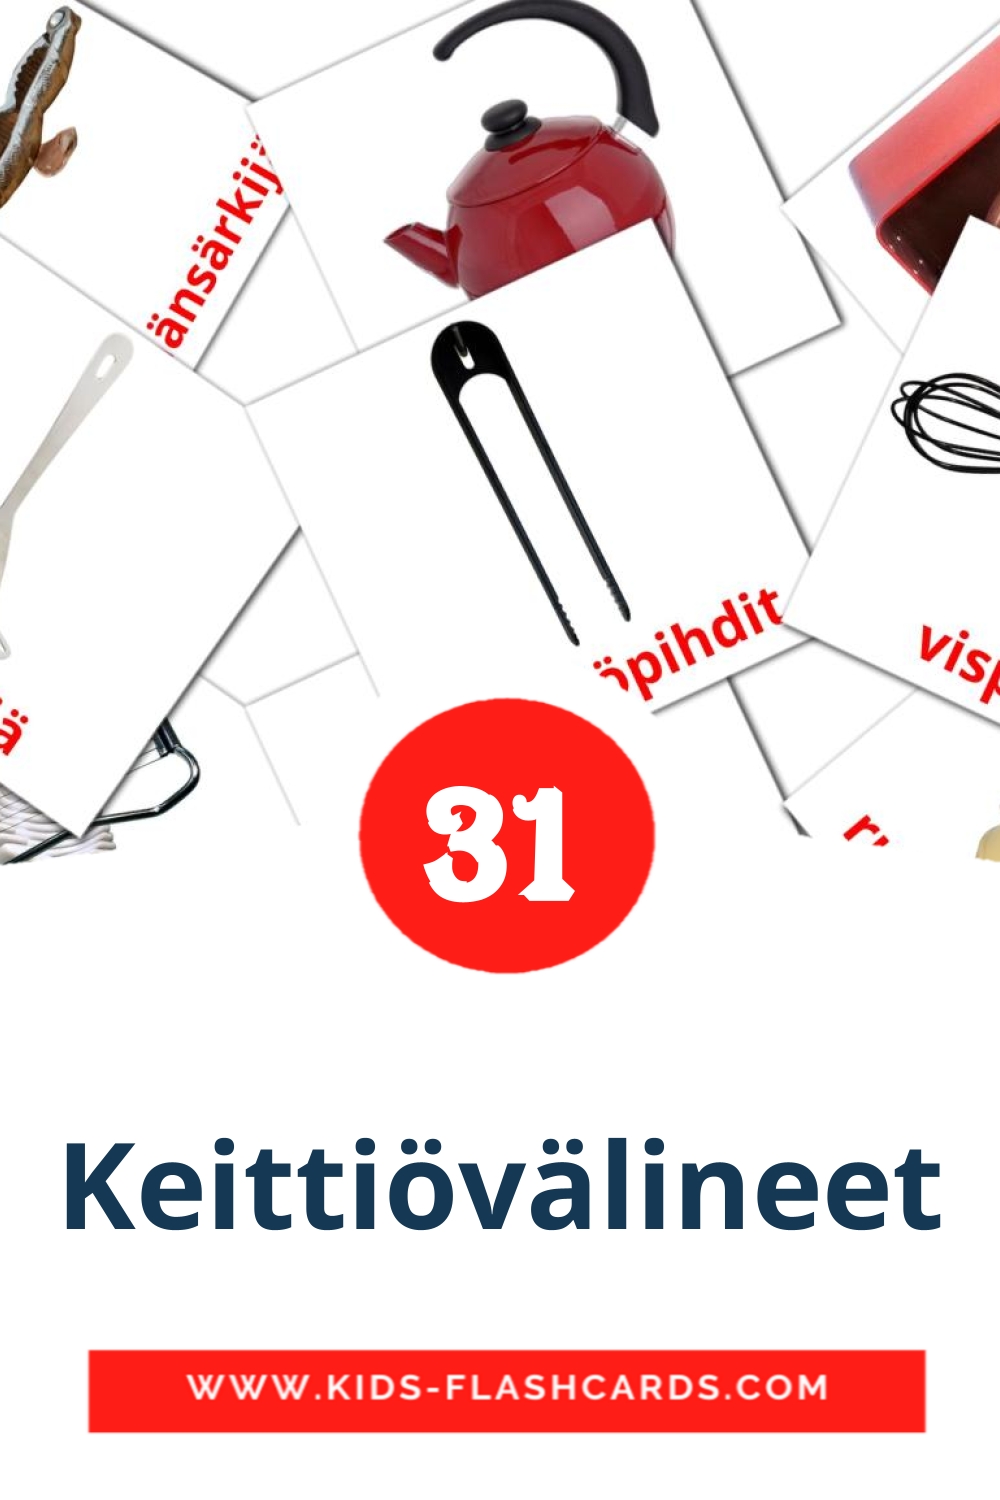 31 carte illustrate di Keittiövälineet per la scuola materna in finlandese